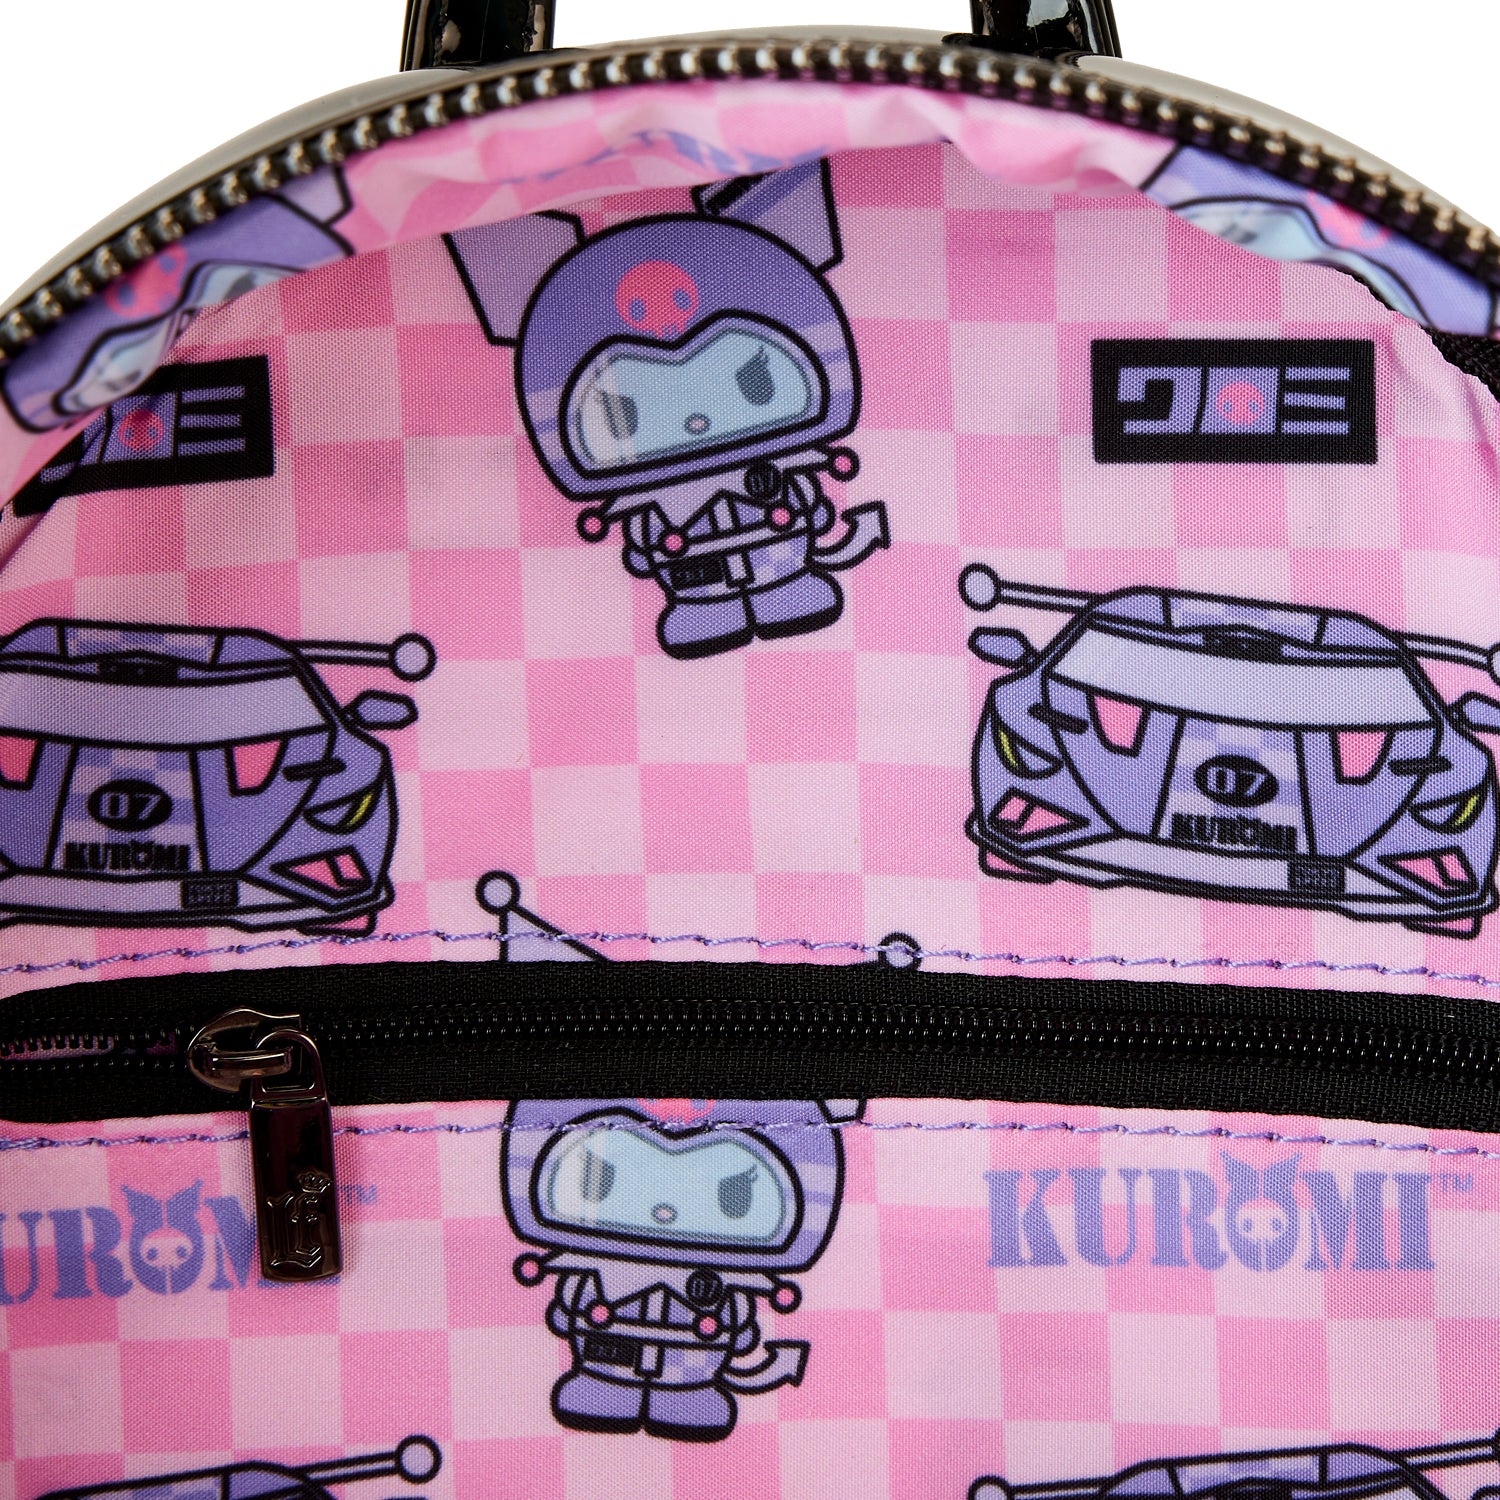 Kuromi x Loungefly Mini Backpack